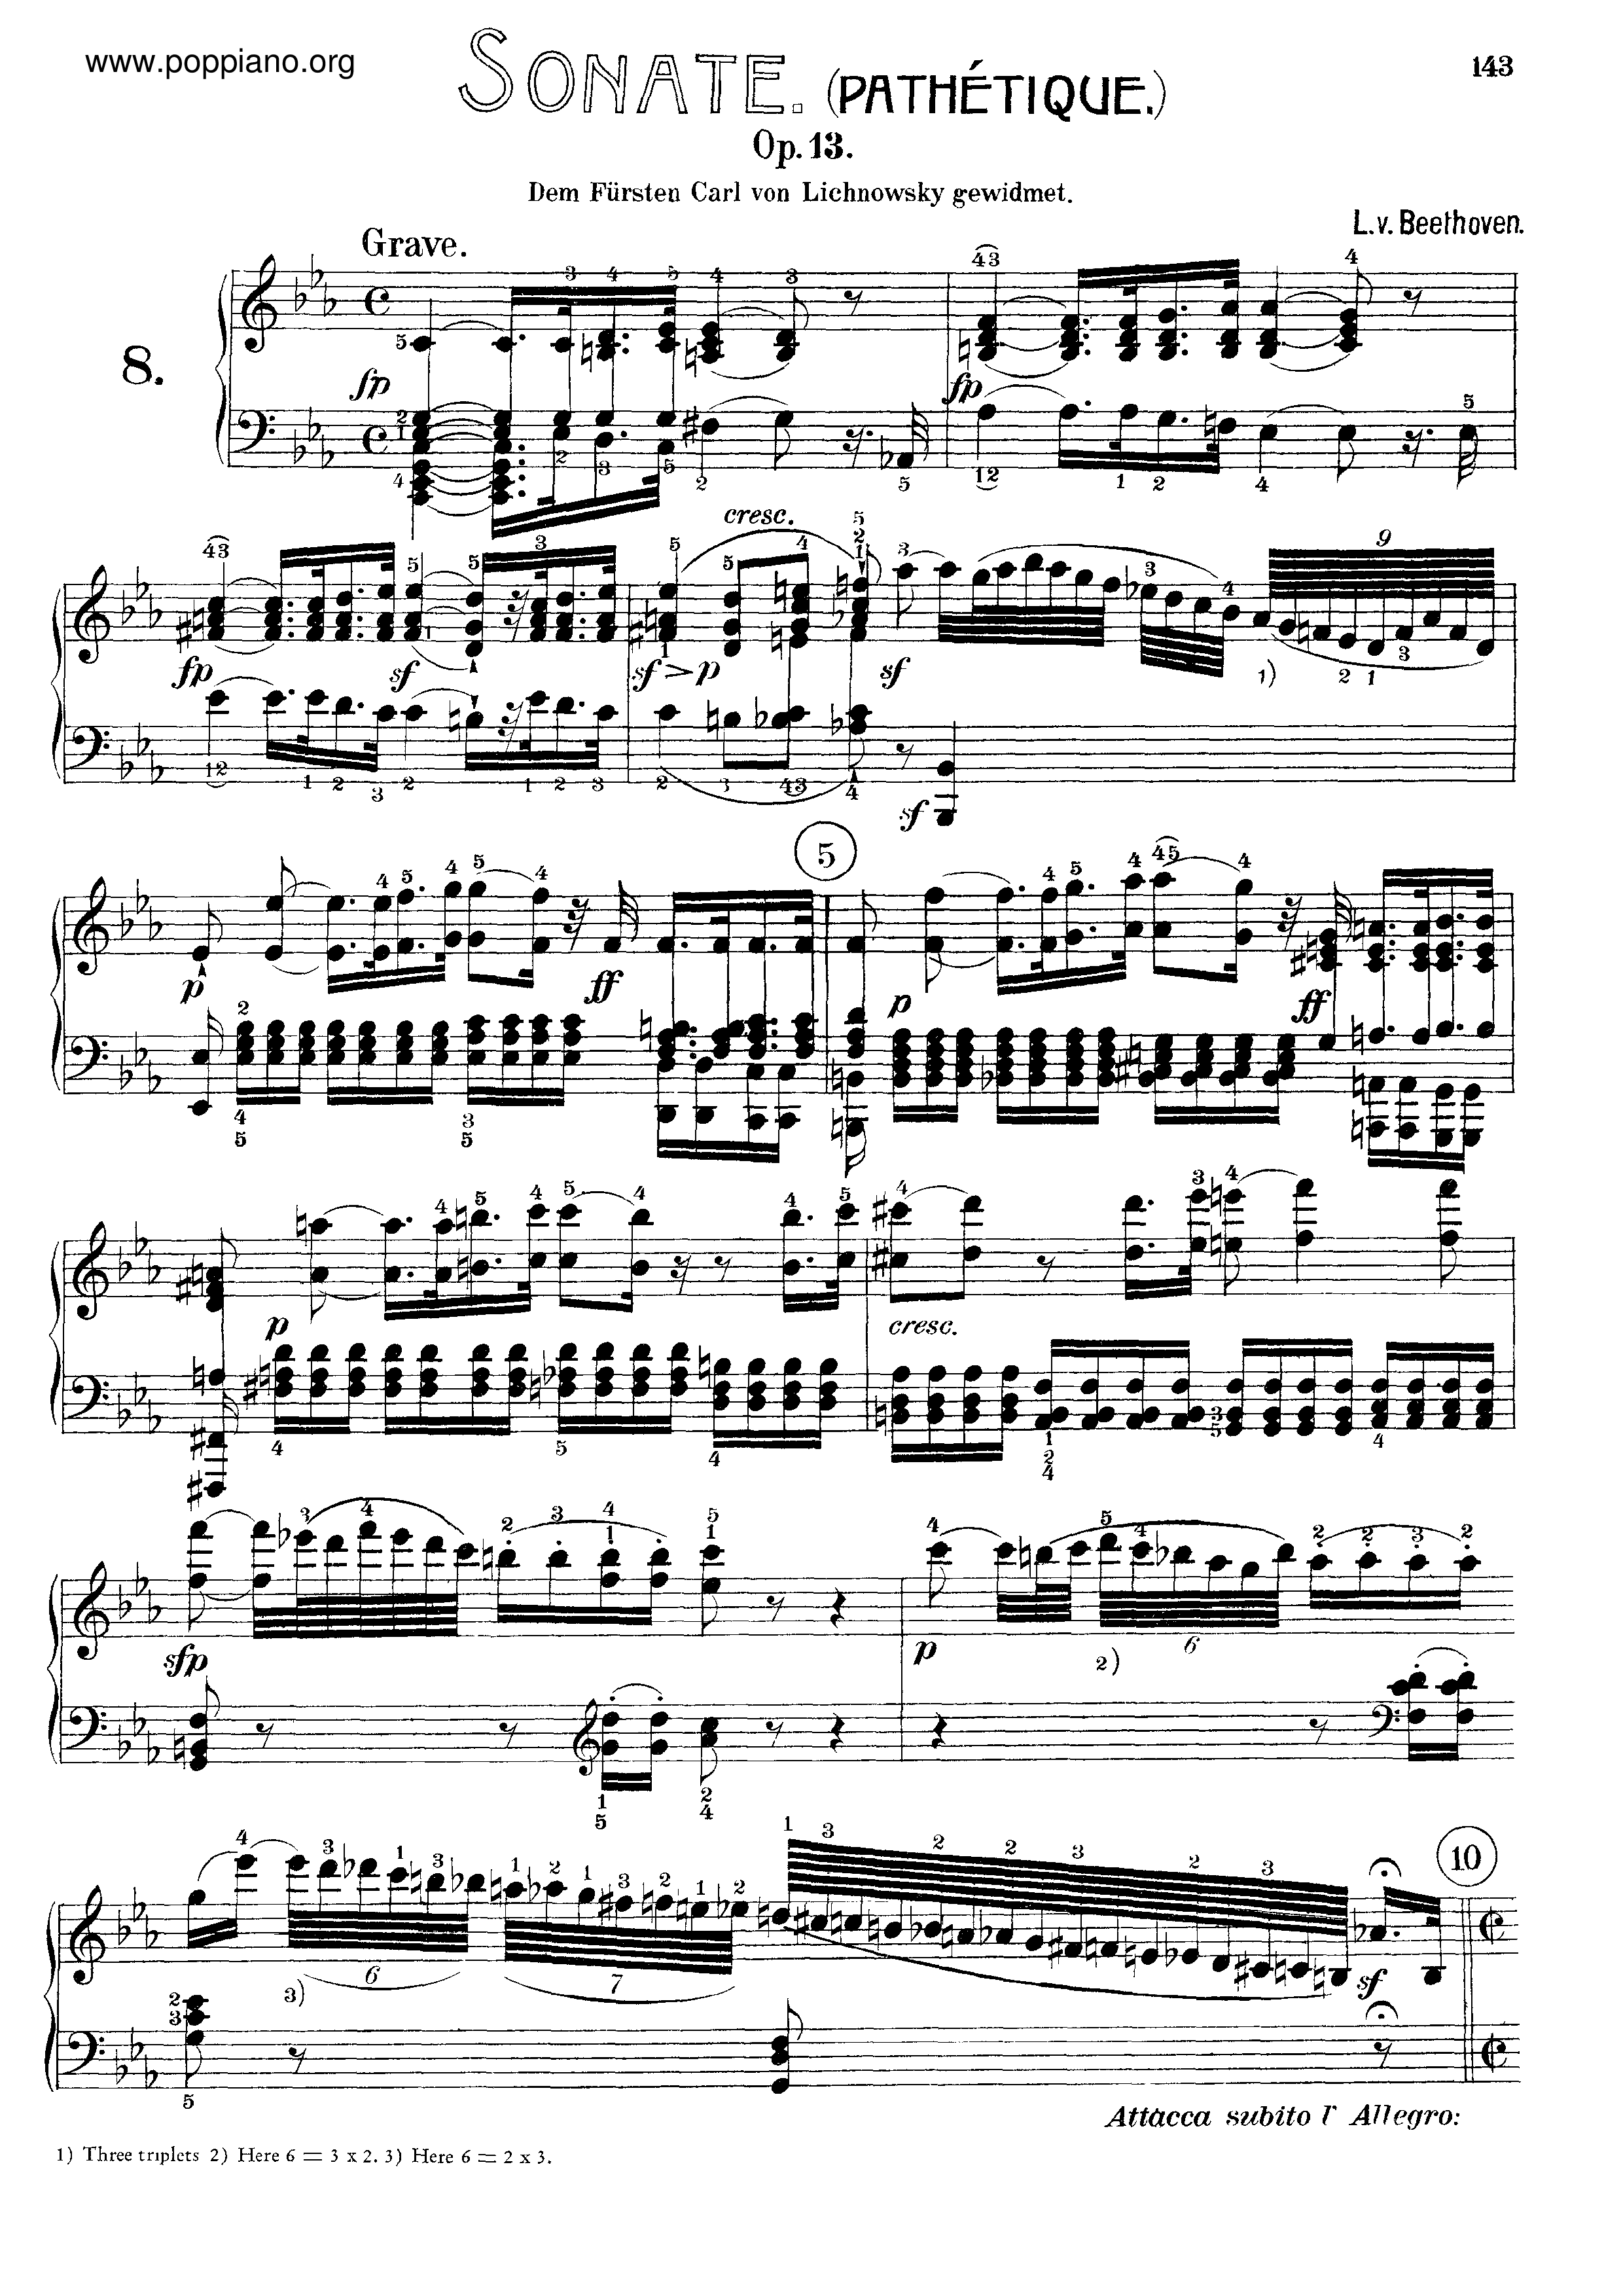 Sonata No. 8, Op. 13 悲愴奏鳴曲 Movt 1-3琴譜